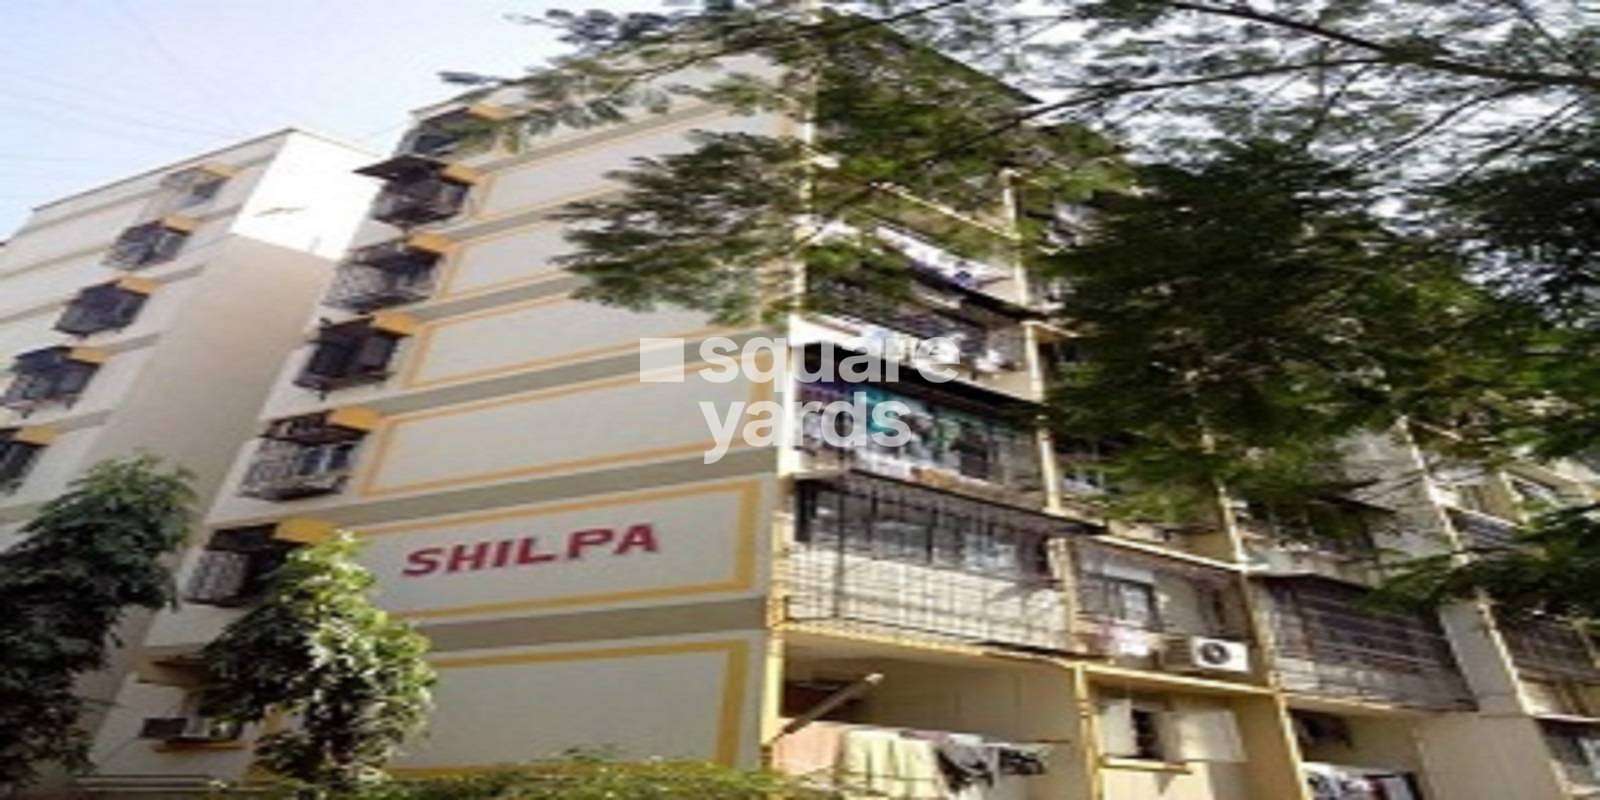 Shilpa Apartment Kandivali Cover Image